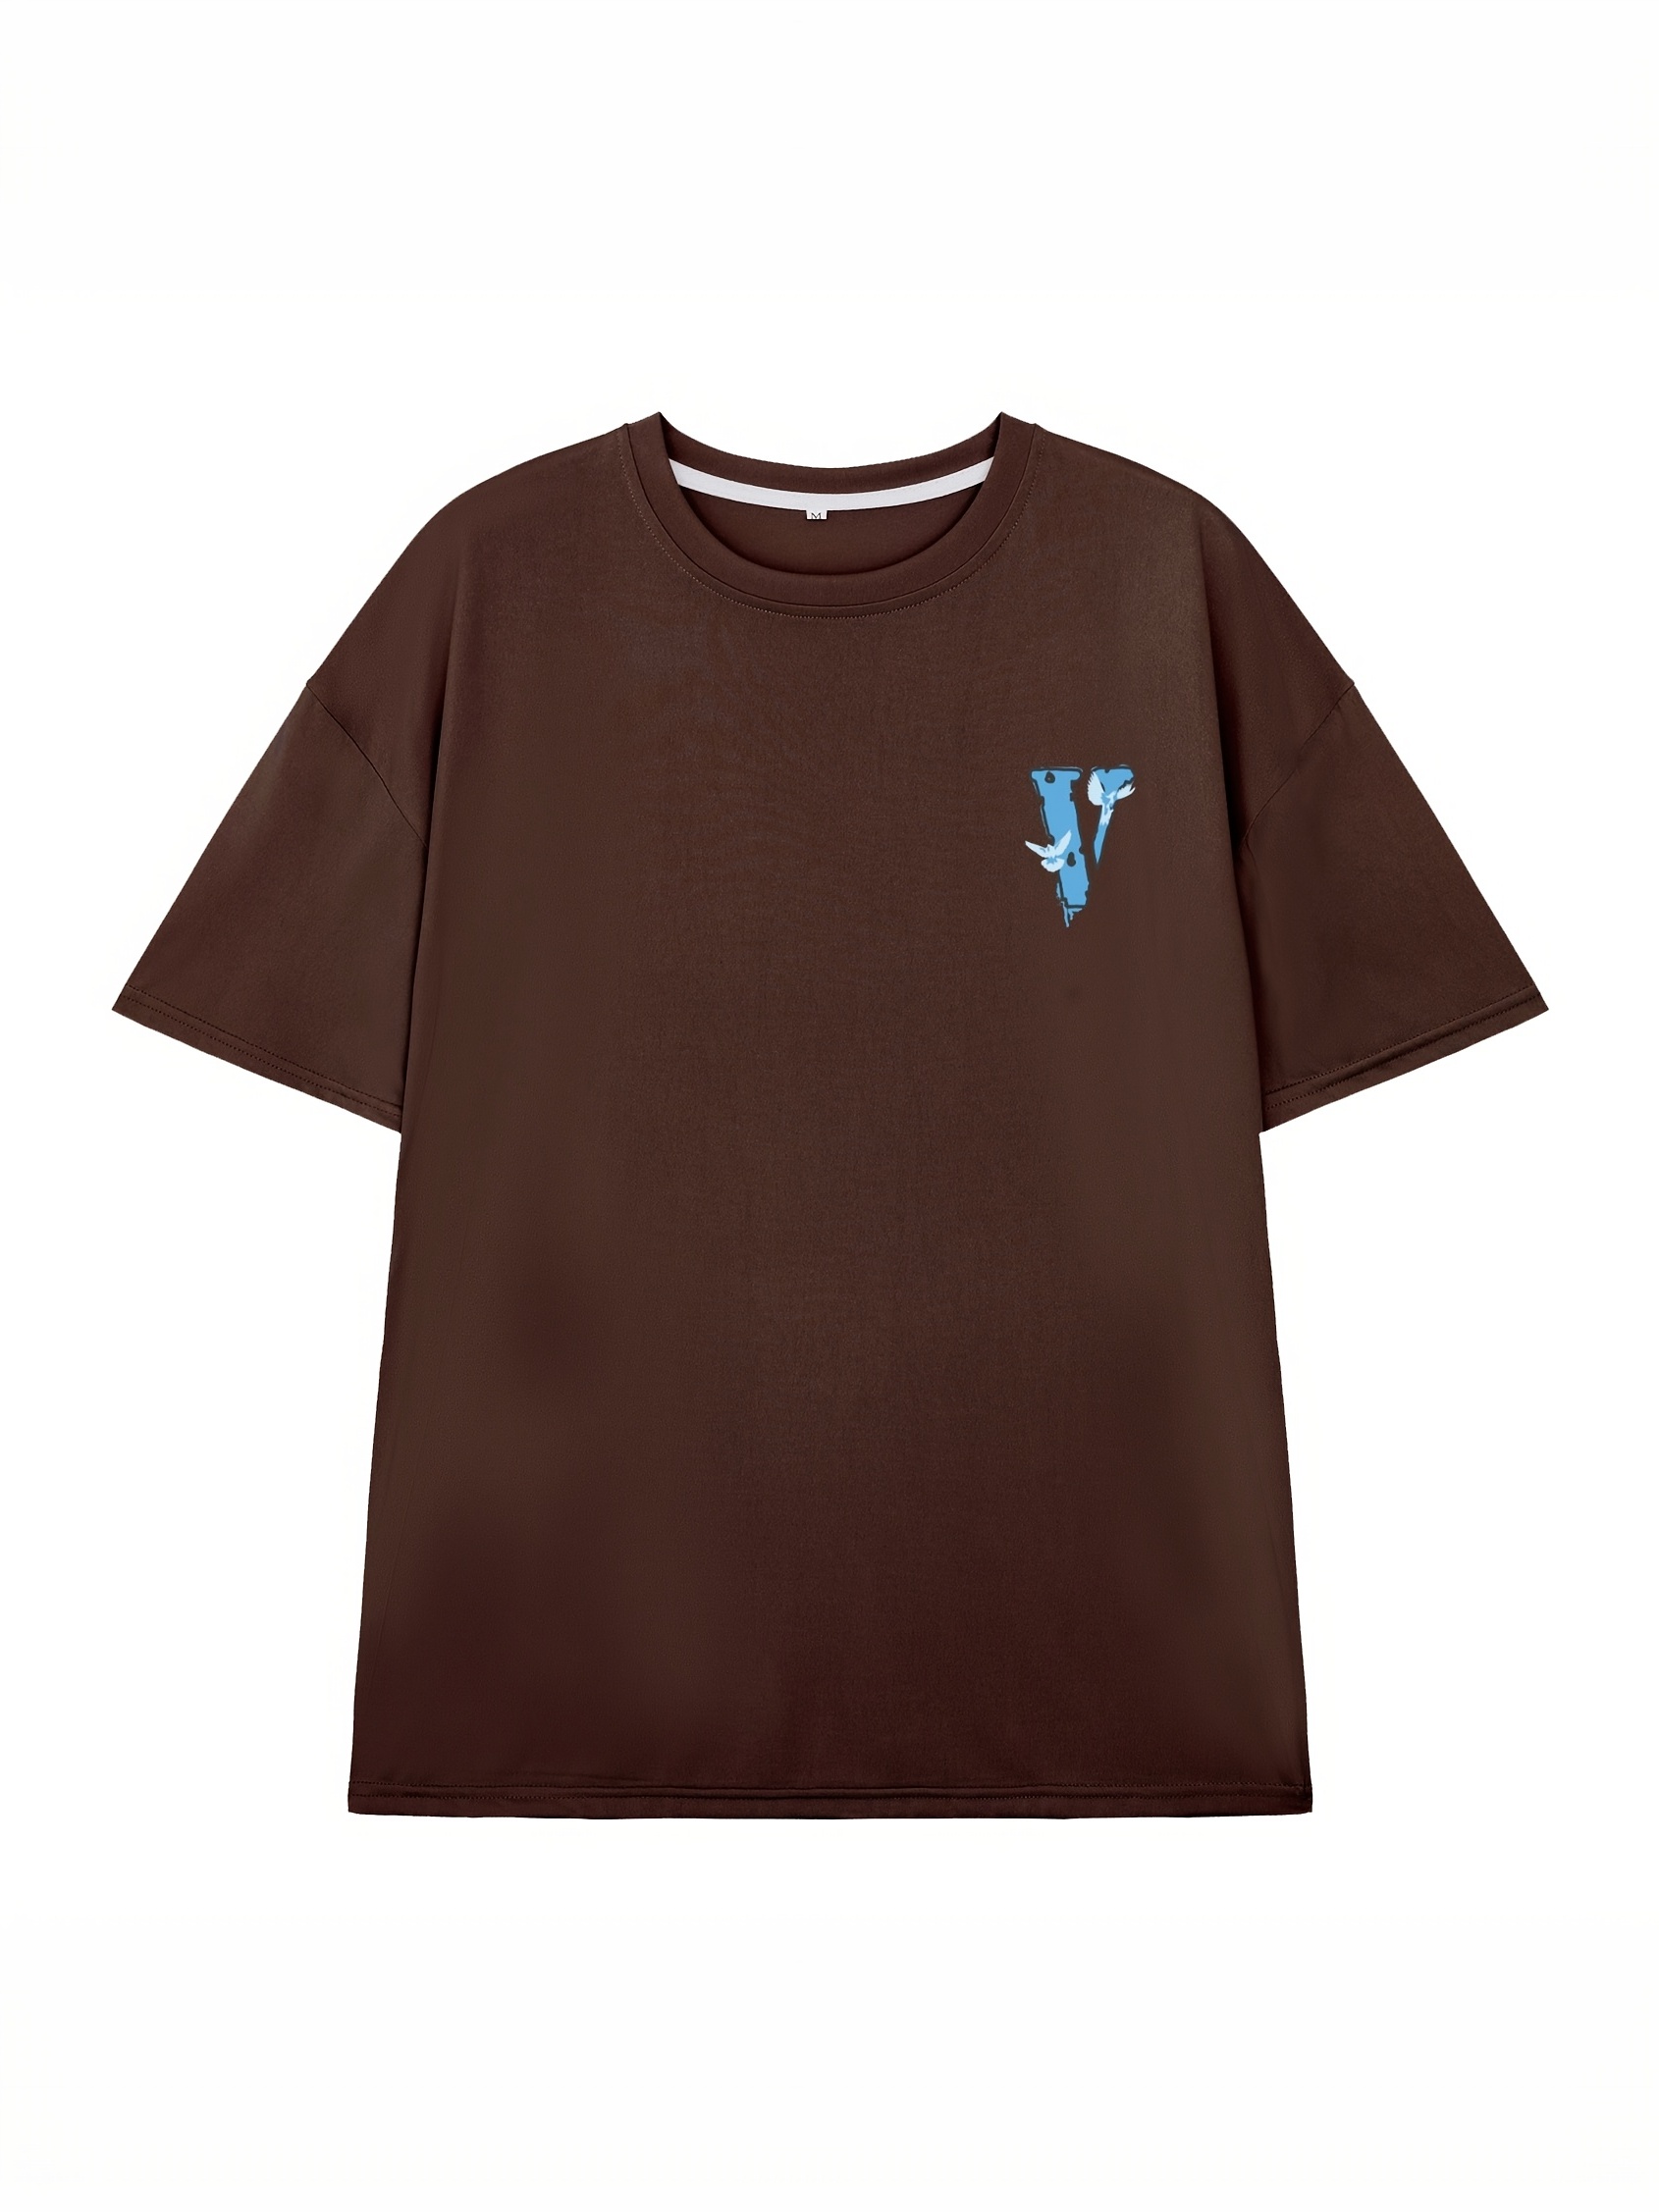 Louis Vuitton Camiseta Masculina De Gola Redonda Em Tamanho Grande